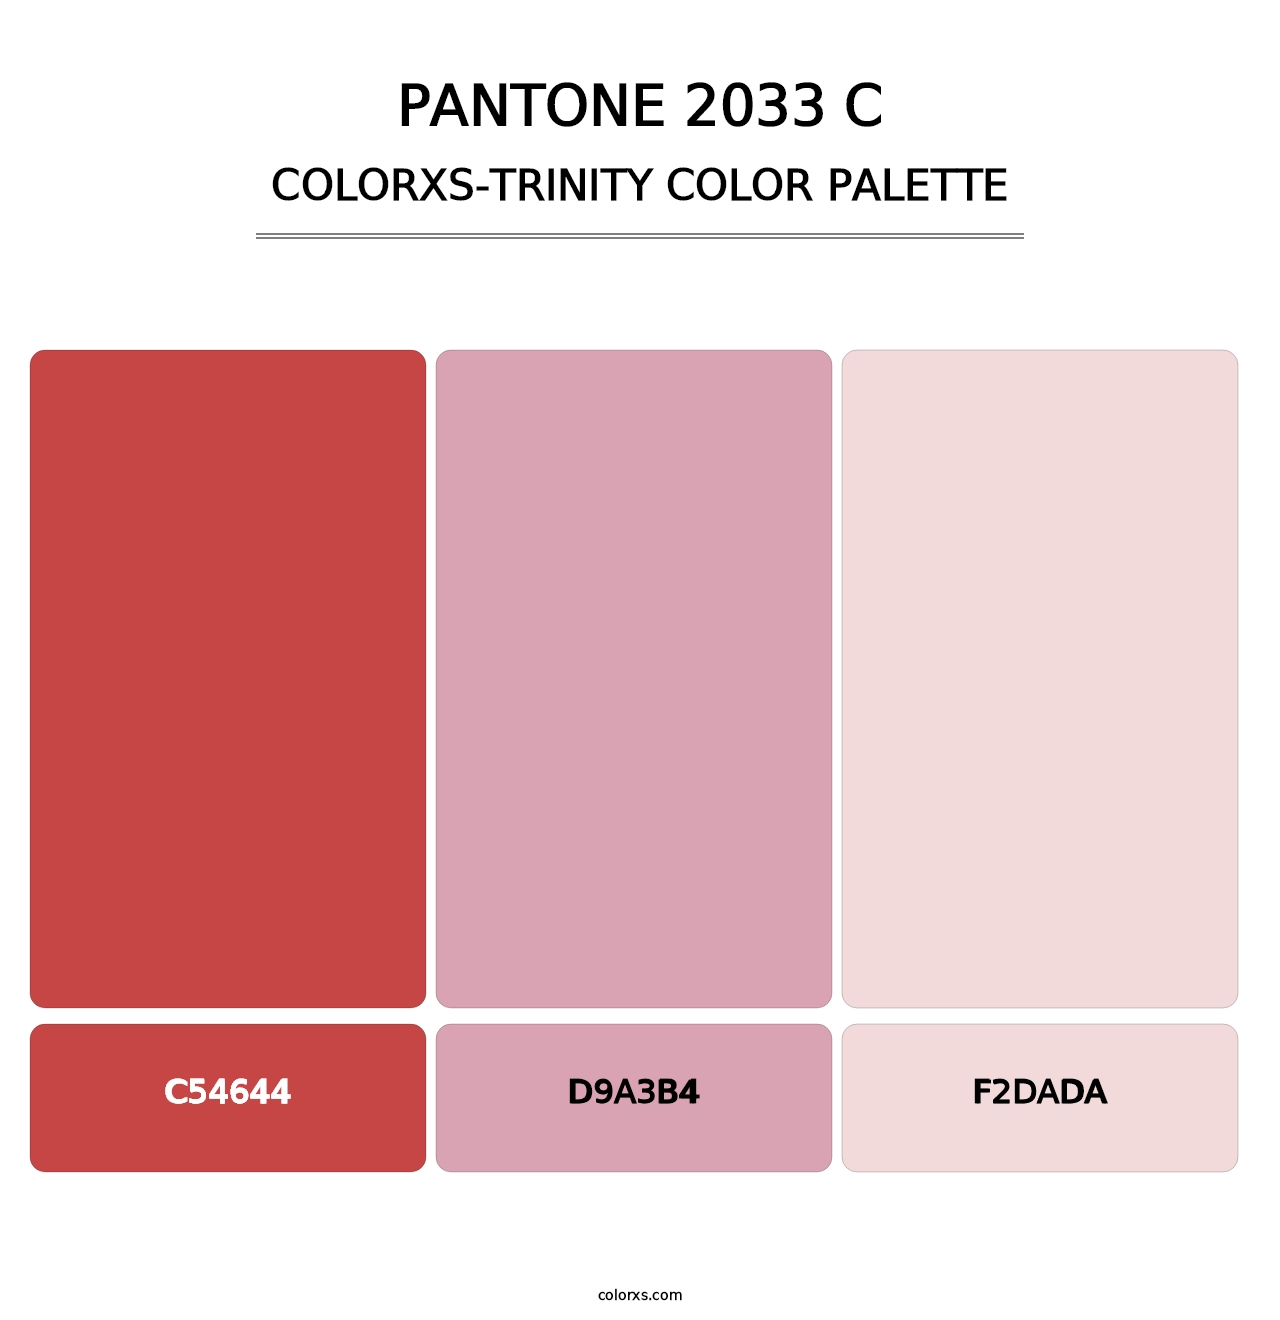 PANTONE 2033 C - Colorxs Trinity Palette